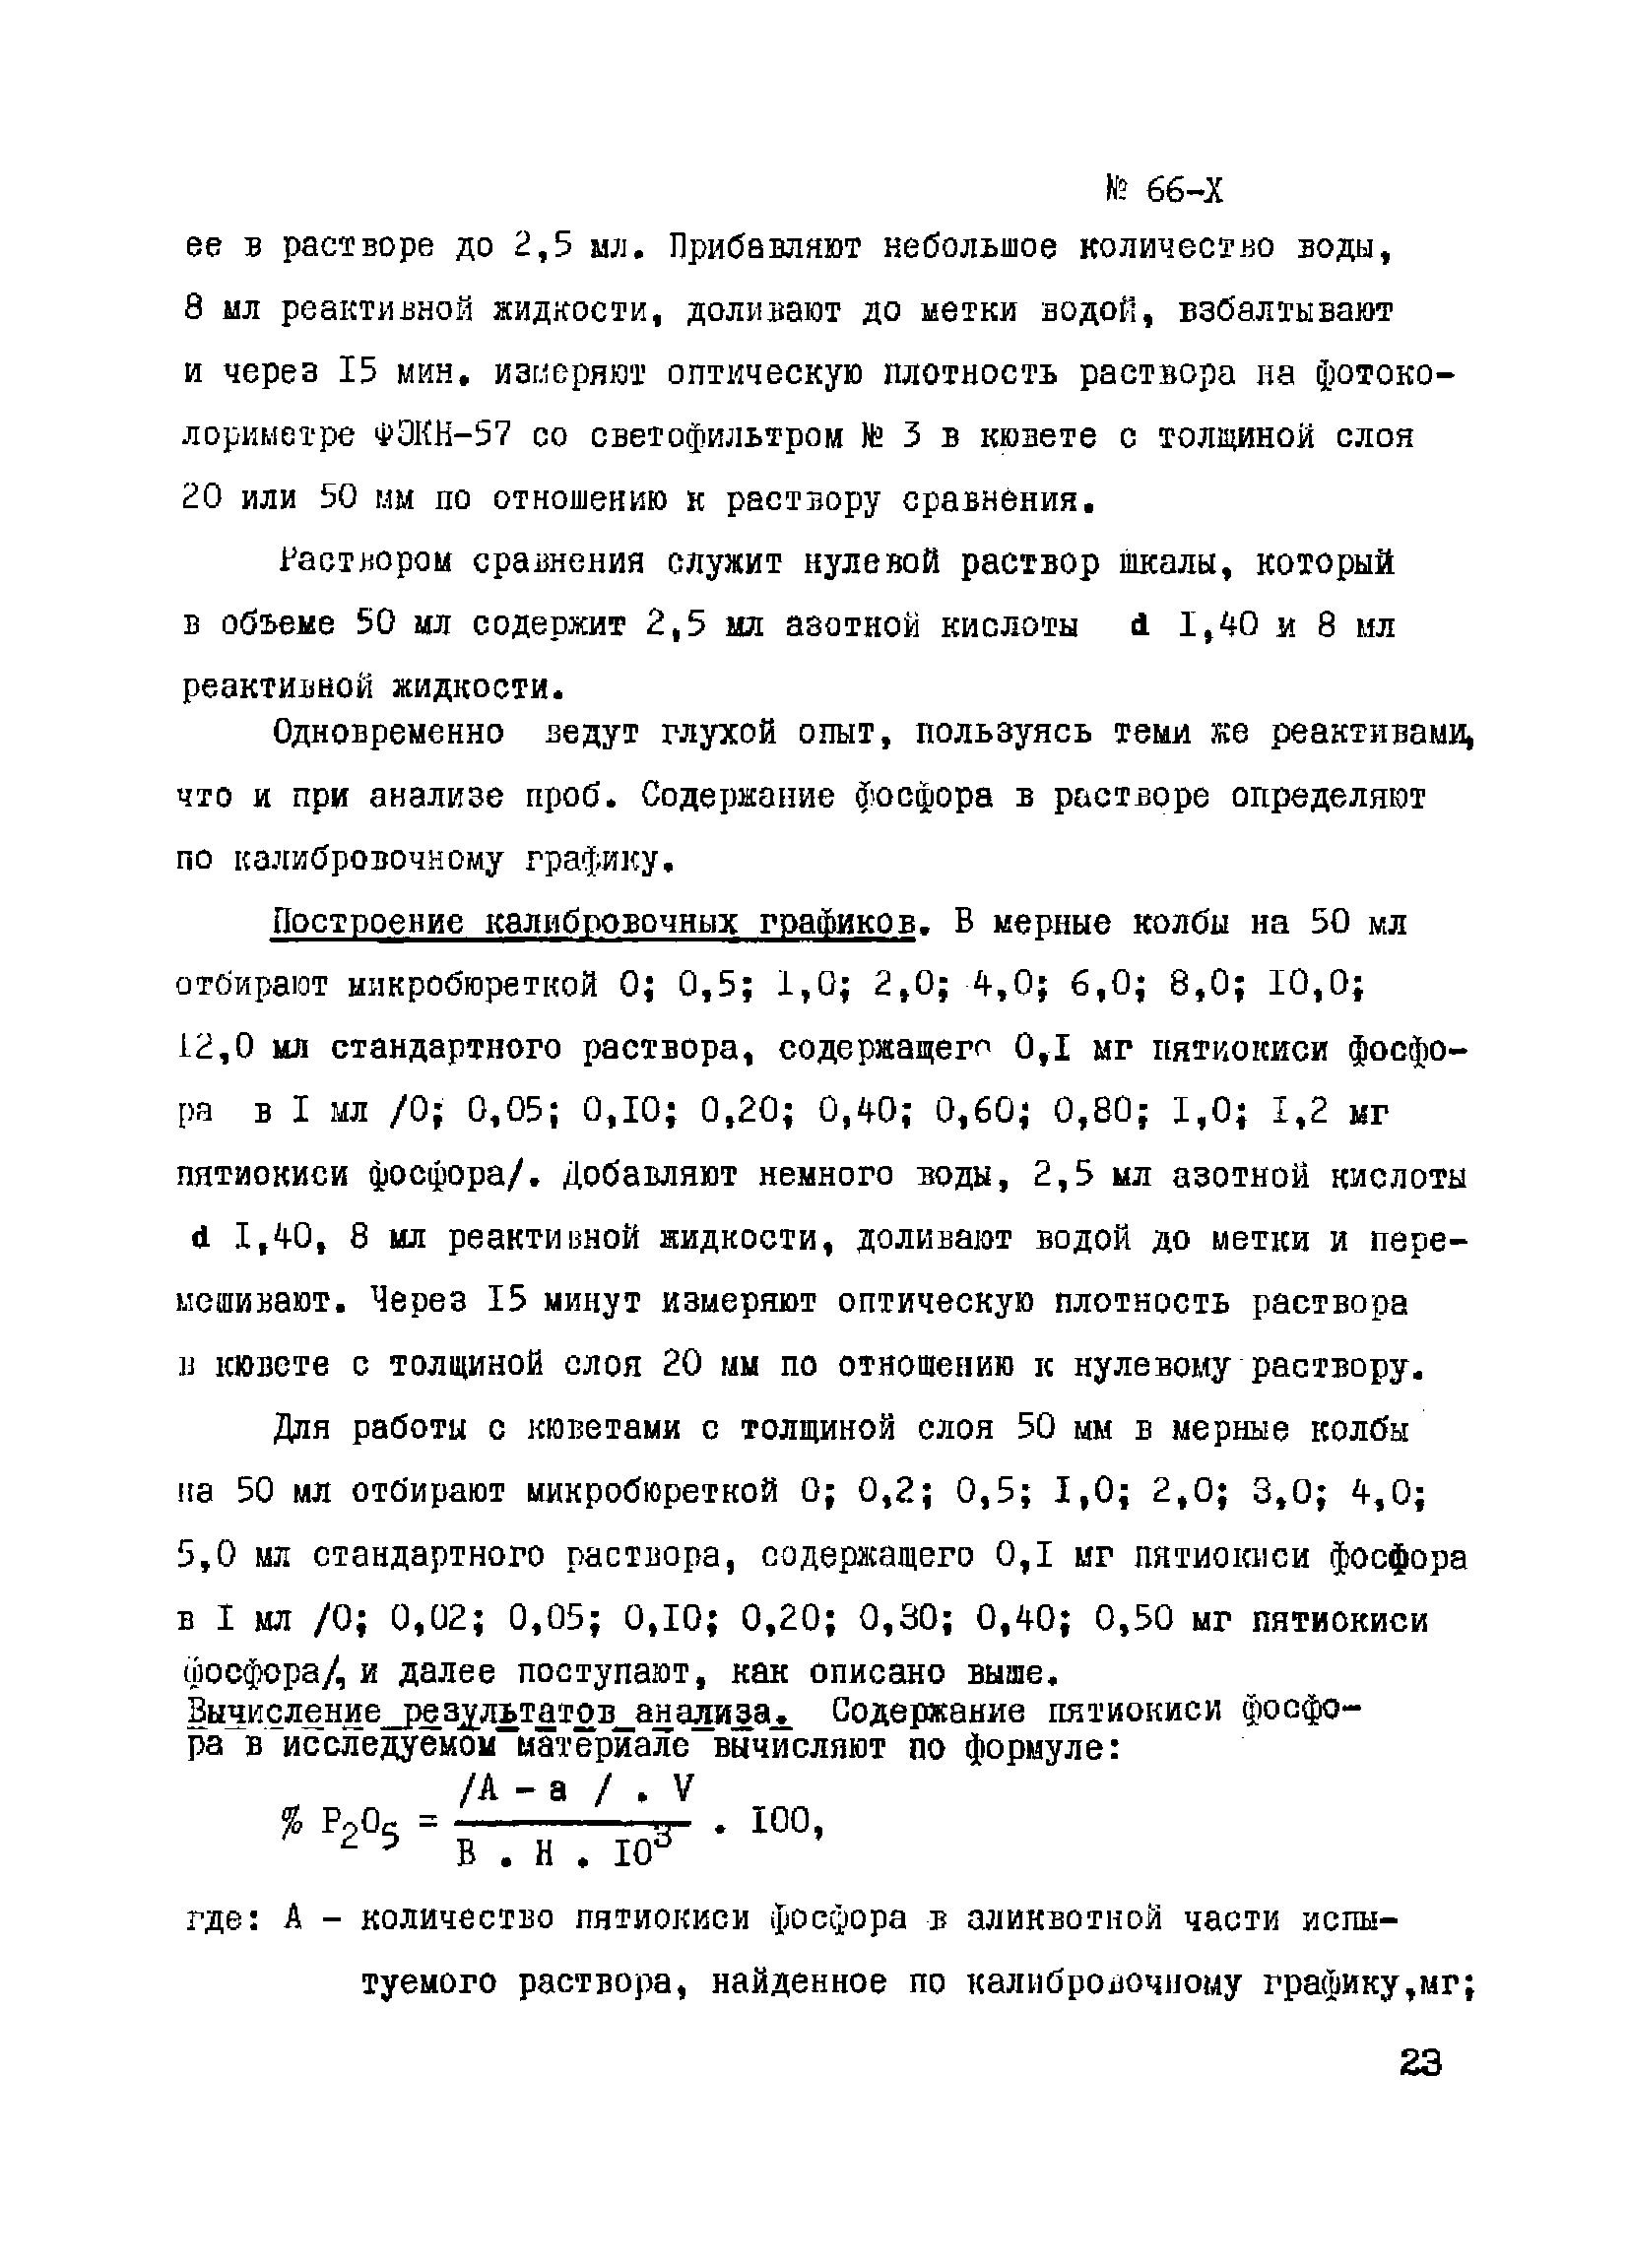 Инструкция НСАМ 66-Х